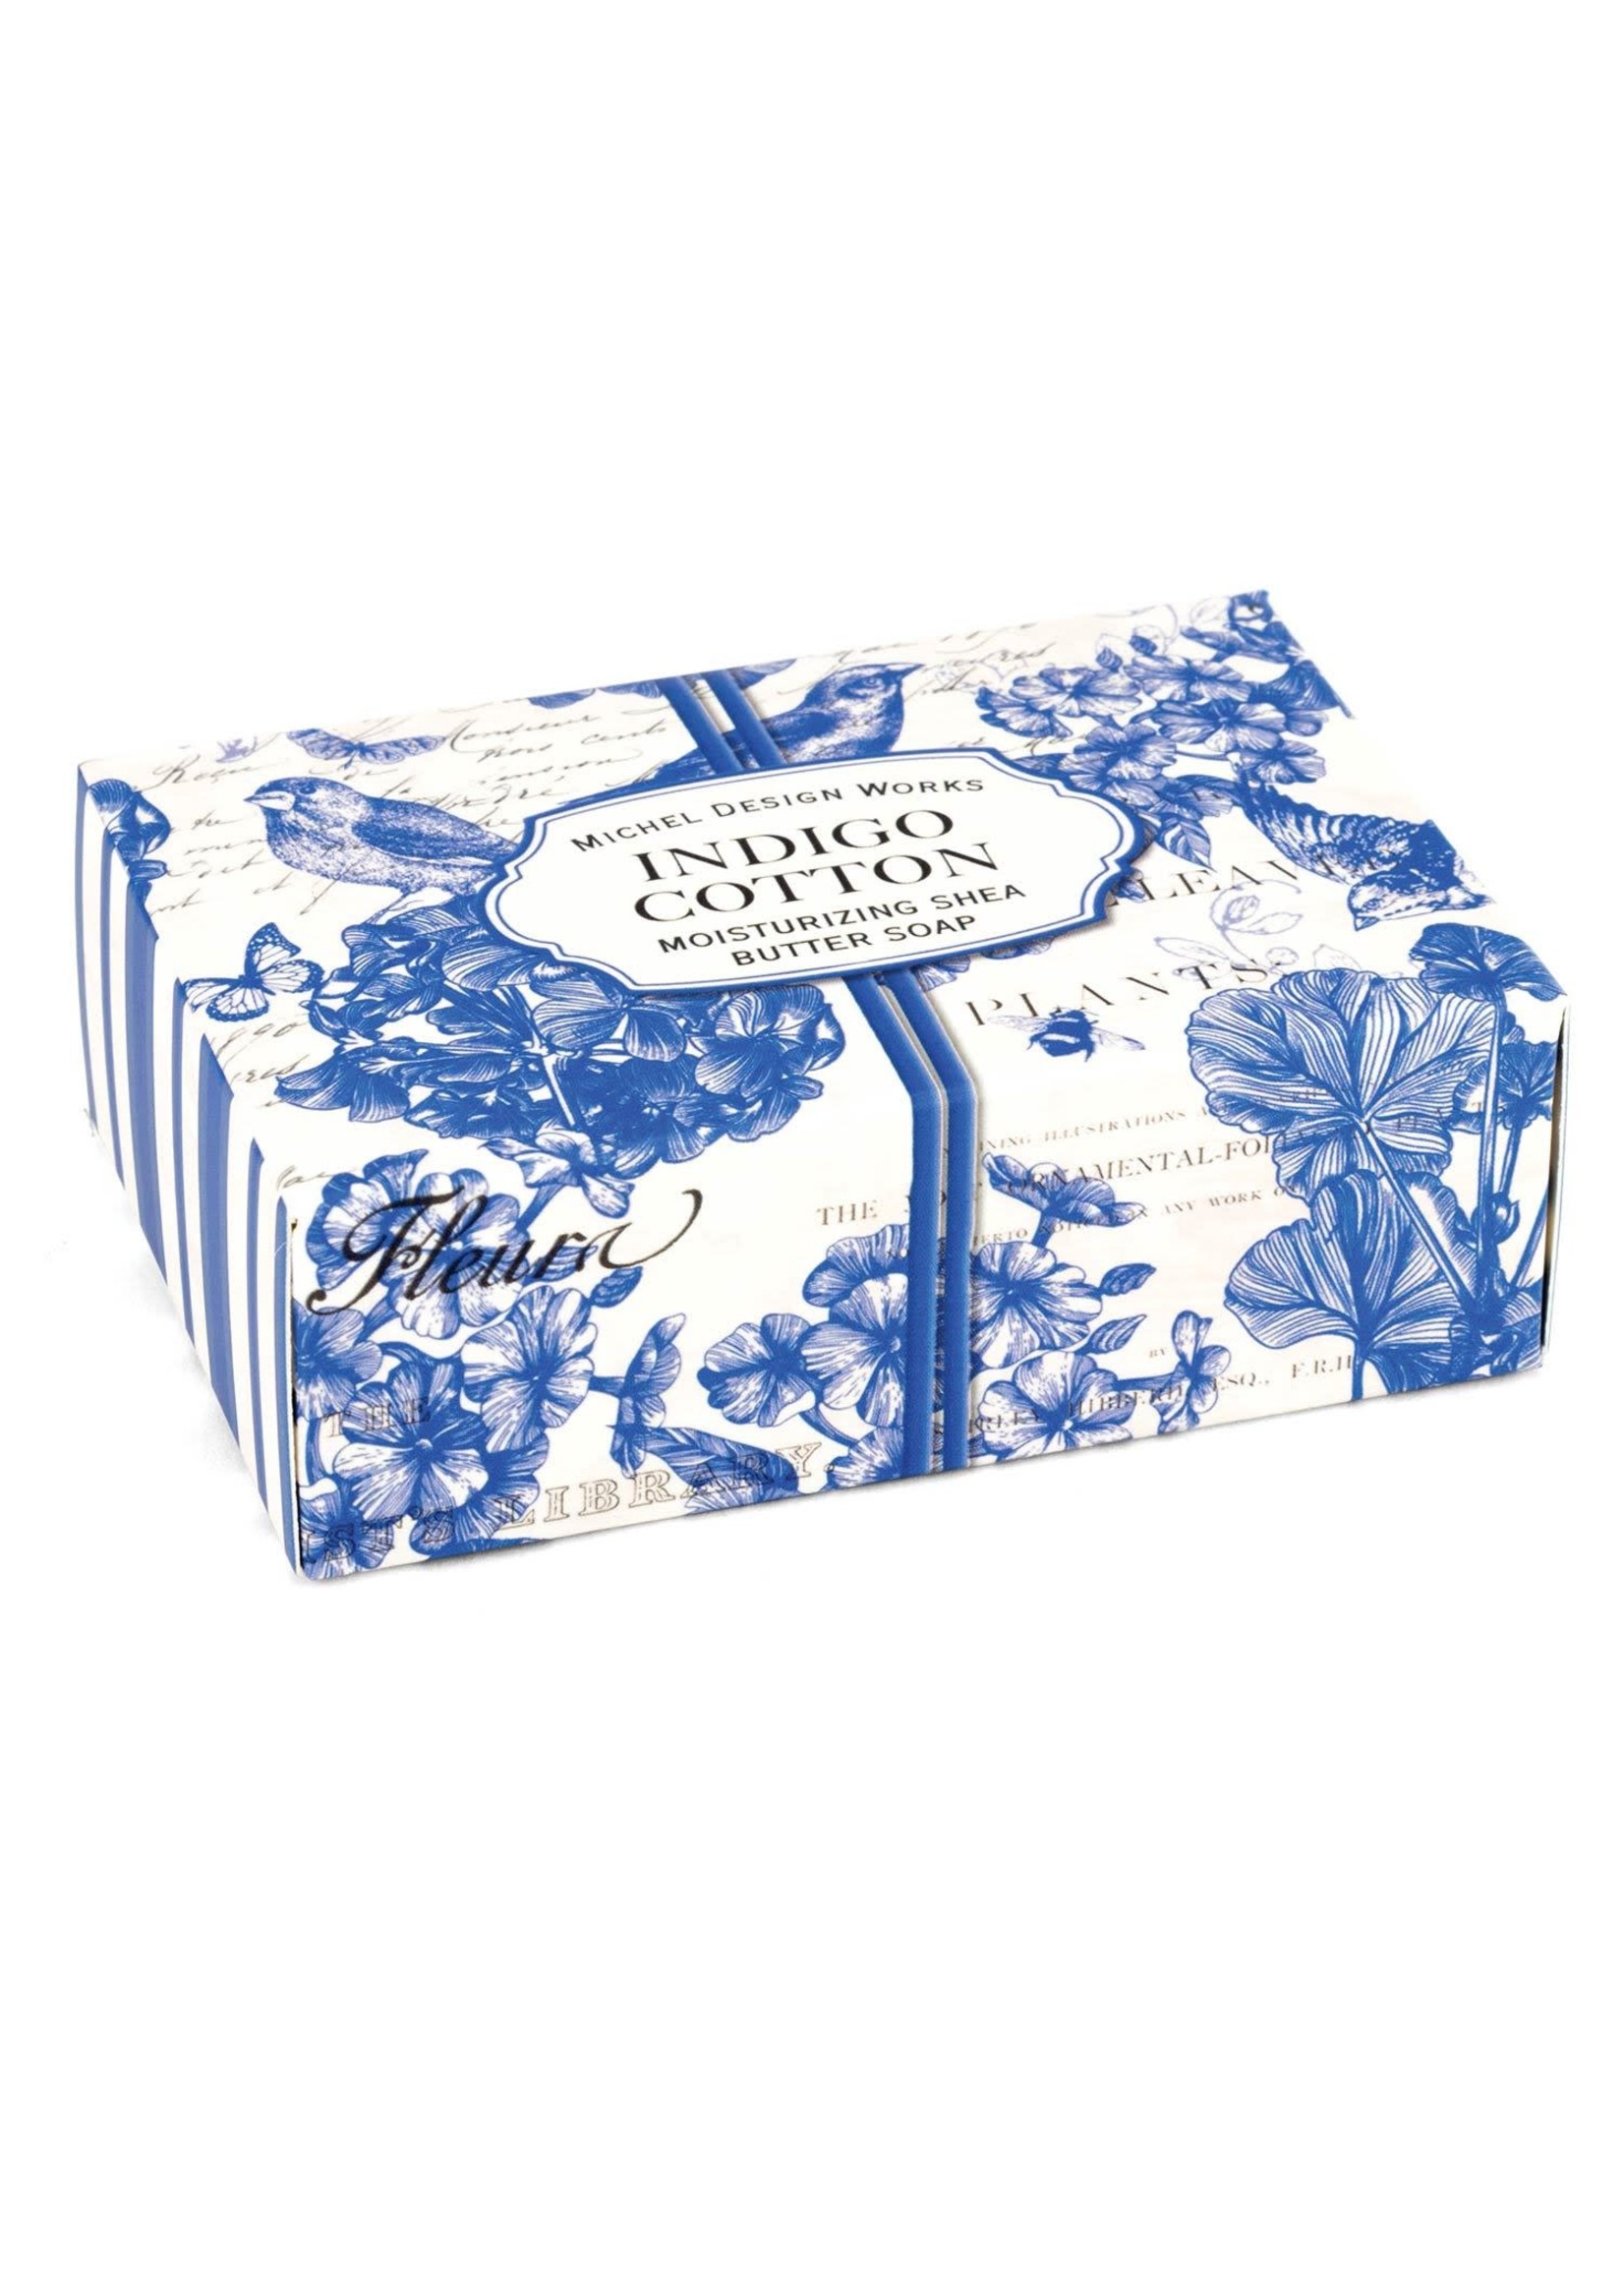 Michel Design Works Moisturizing Shea Butter Boxed Soap 4.5 oz